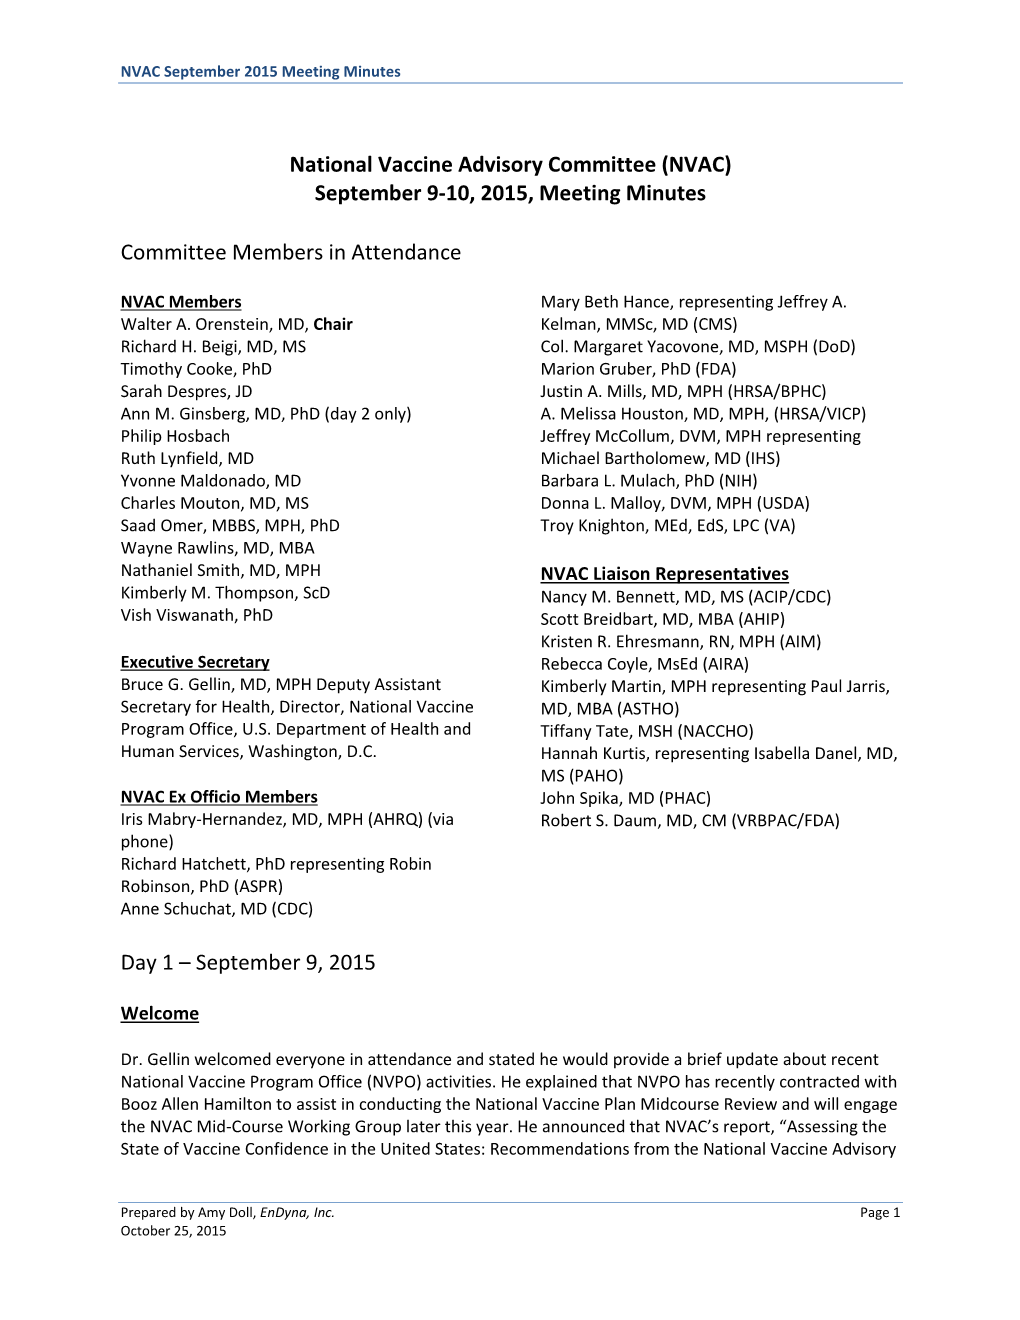 National Vaccine Advisory Committee (NVAC) September 9-10, 2015, Meeting Minutes